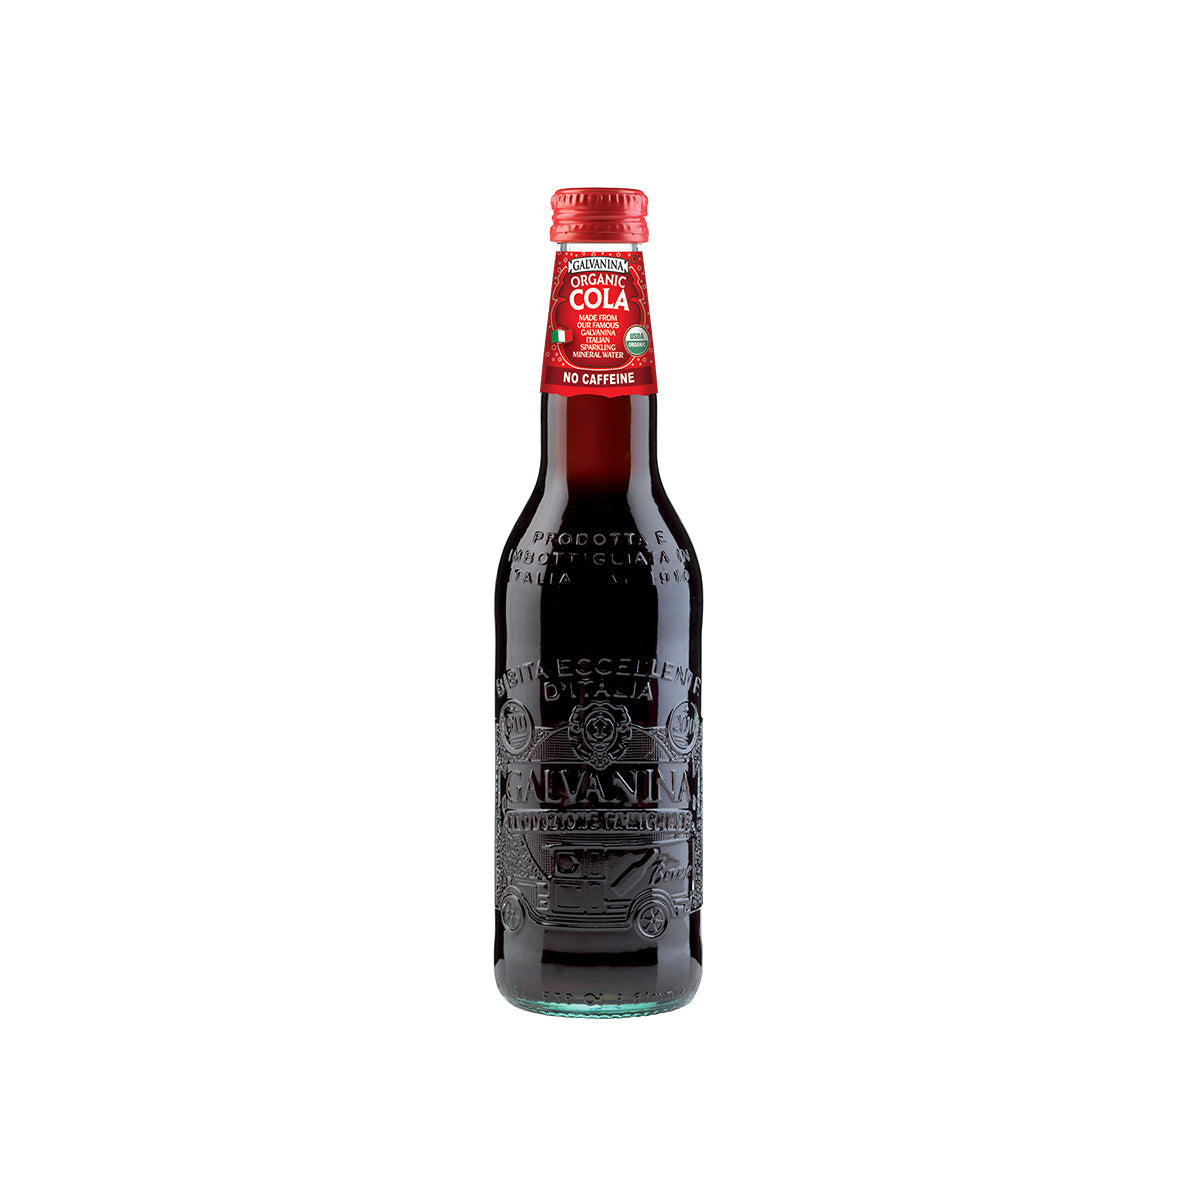 Galvanina Organic Cola 12 Oz Bottle - 12 Ct